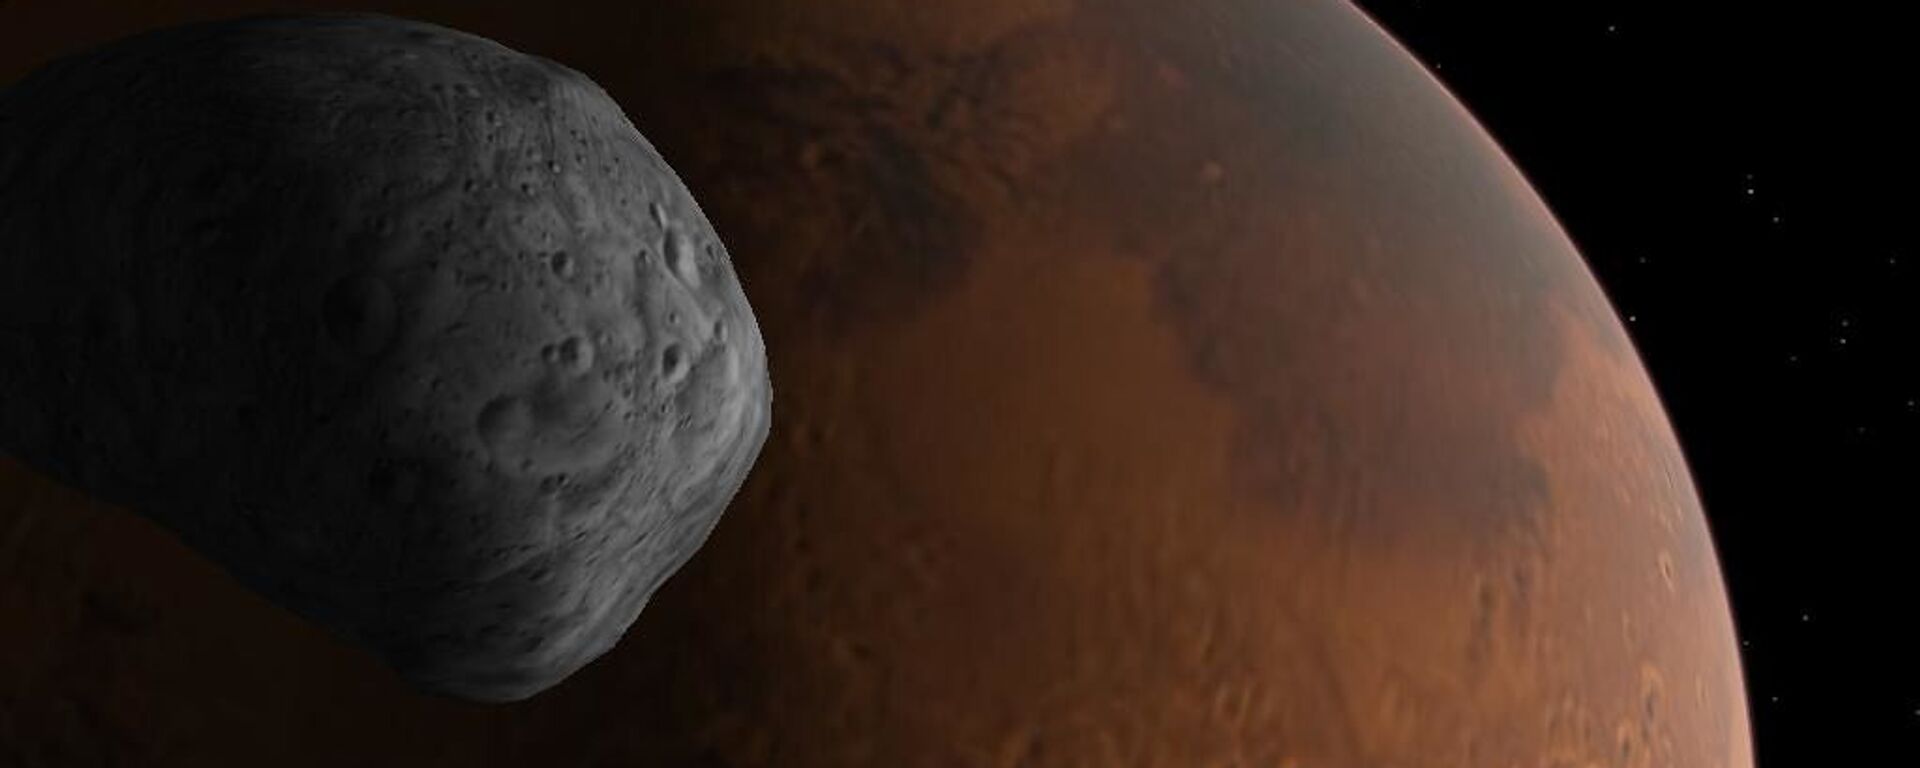 Japan Planning Soil Sampling Mission to Mars' Moon Phobos, Reports Say - Sputnik International, 1920, 29.06.2021